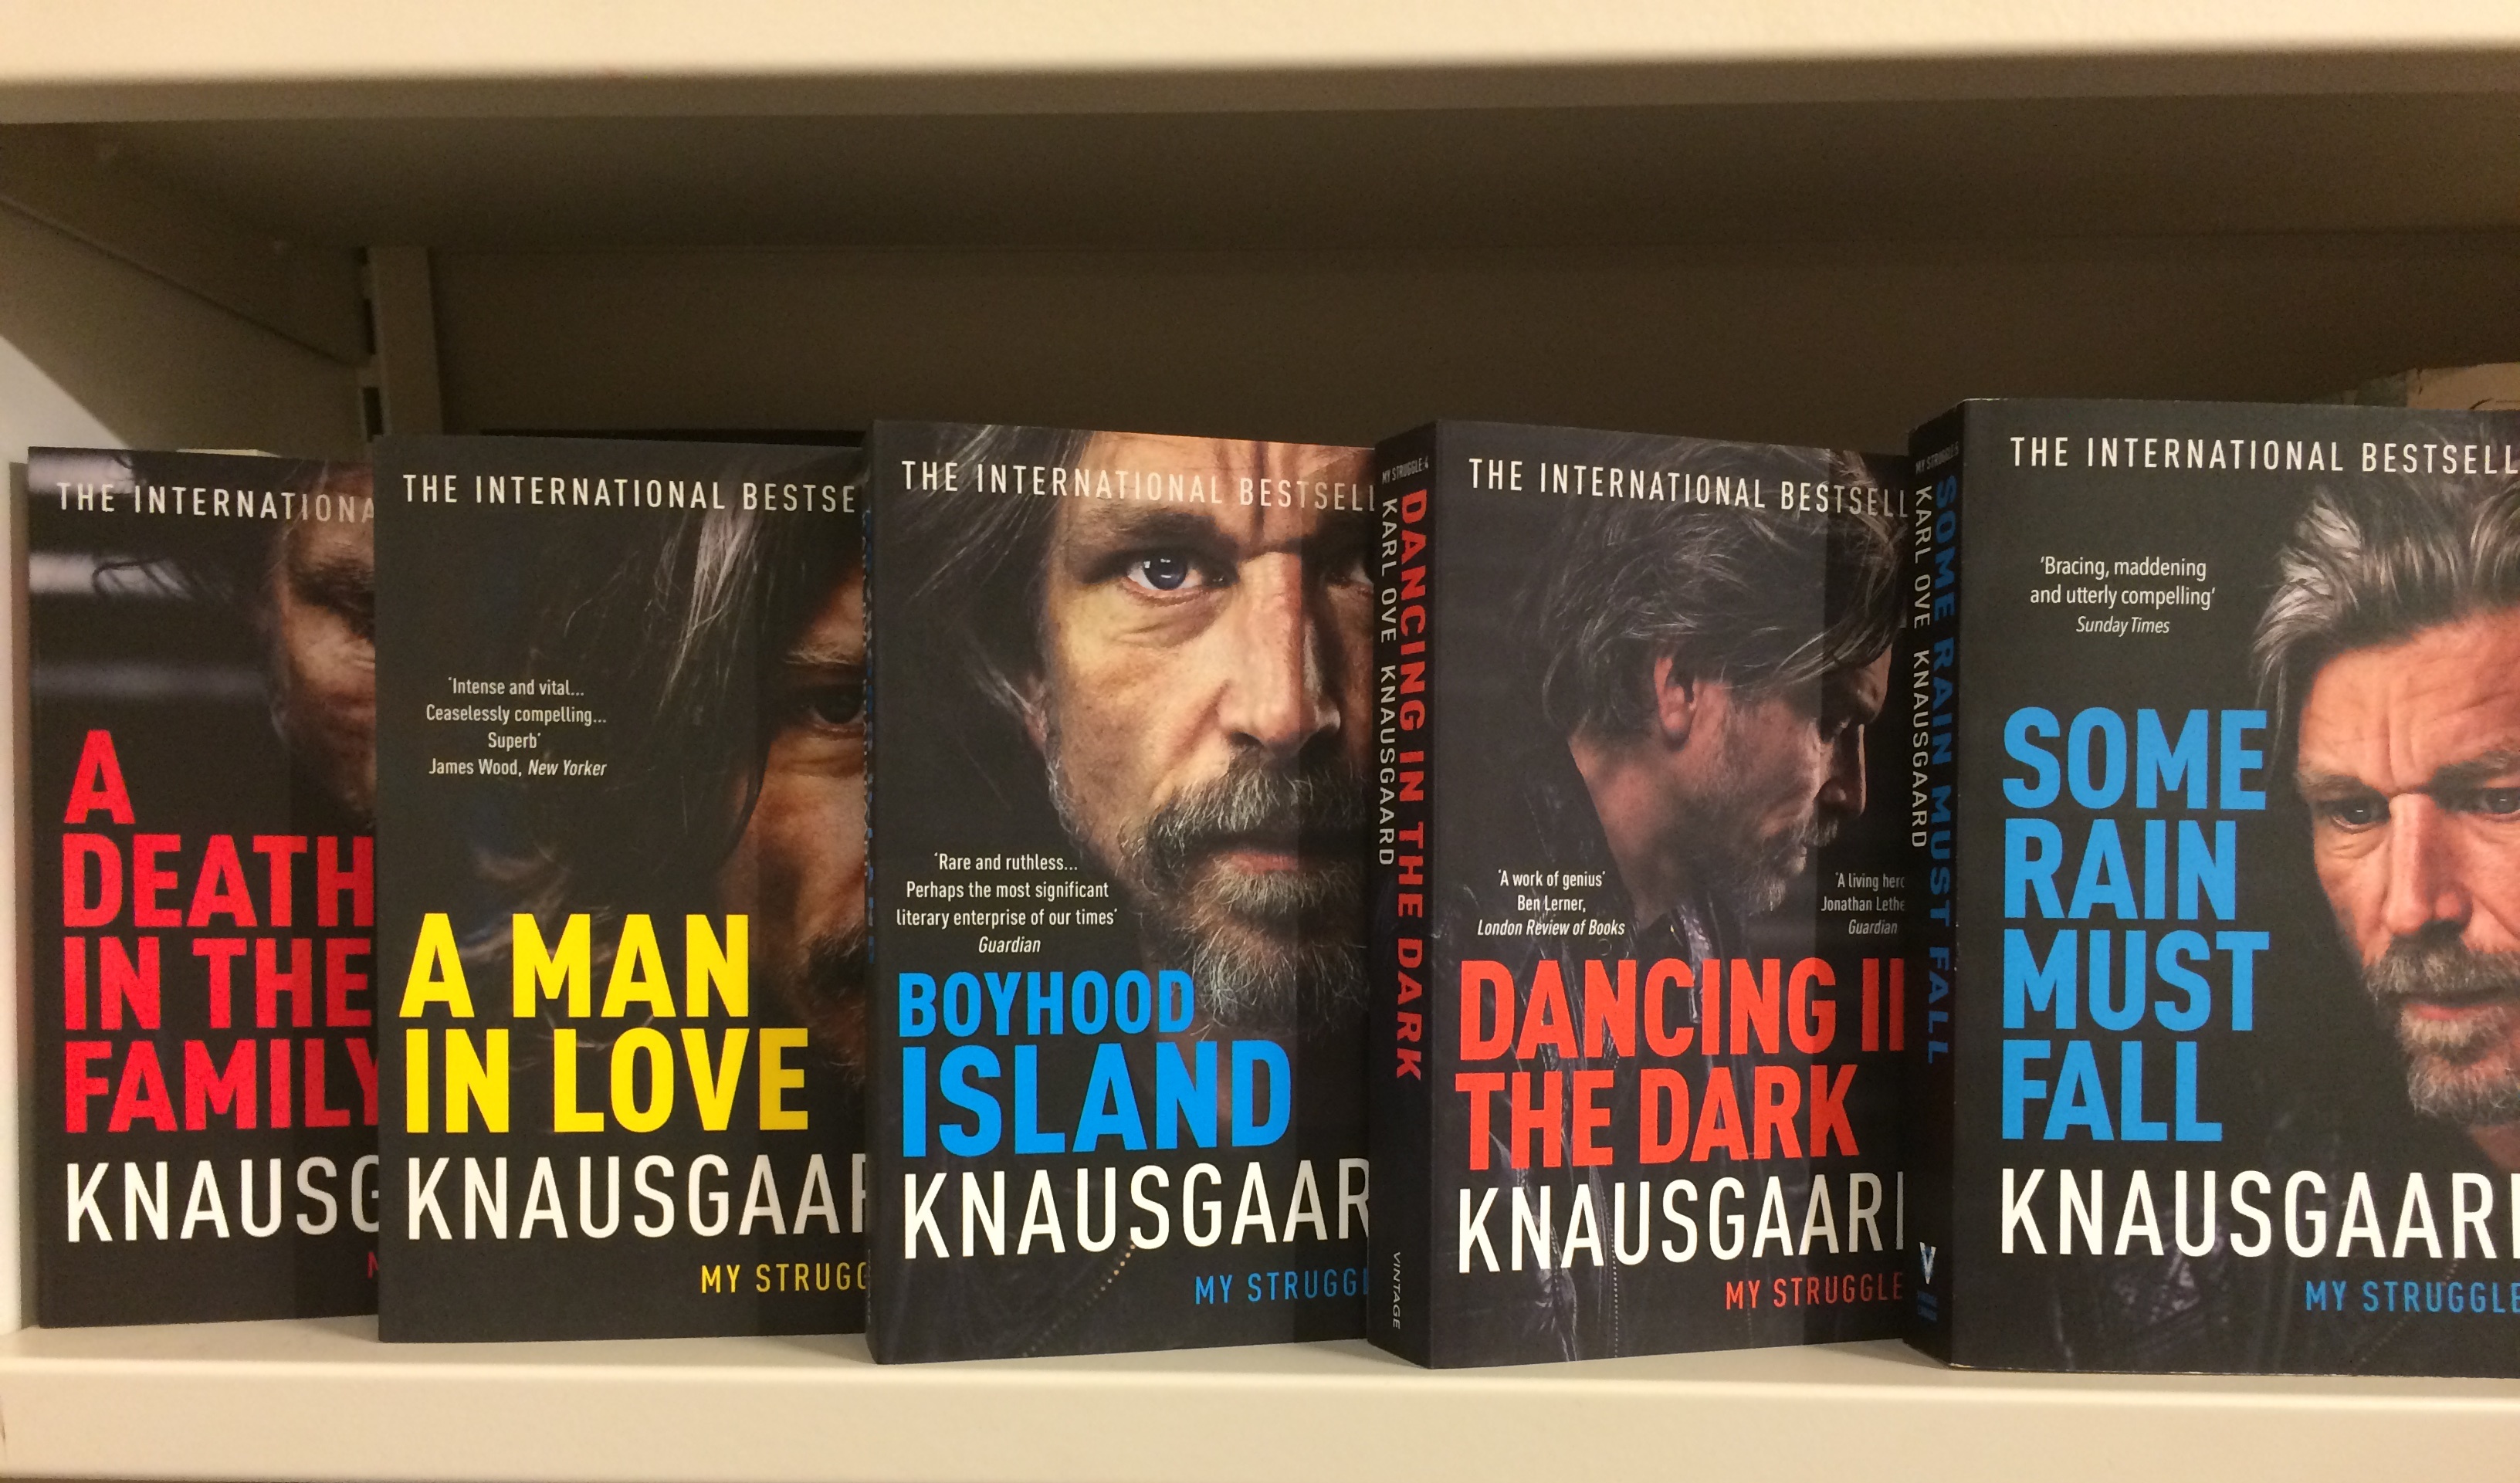 My Struggle, Book Two by Karl Ove Knausgård